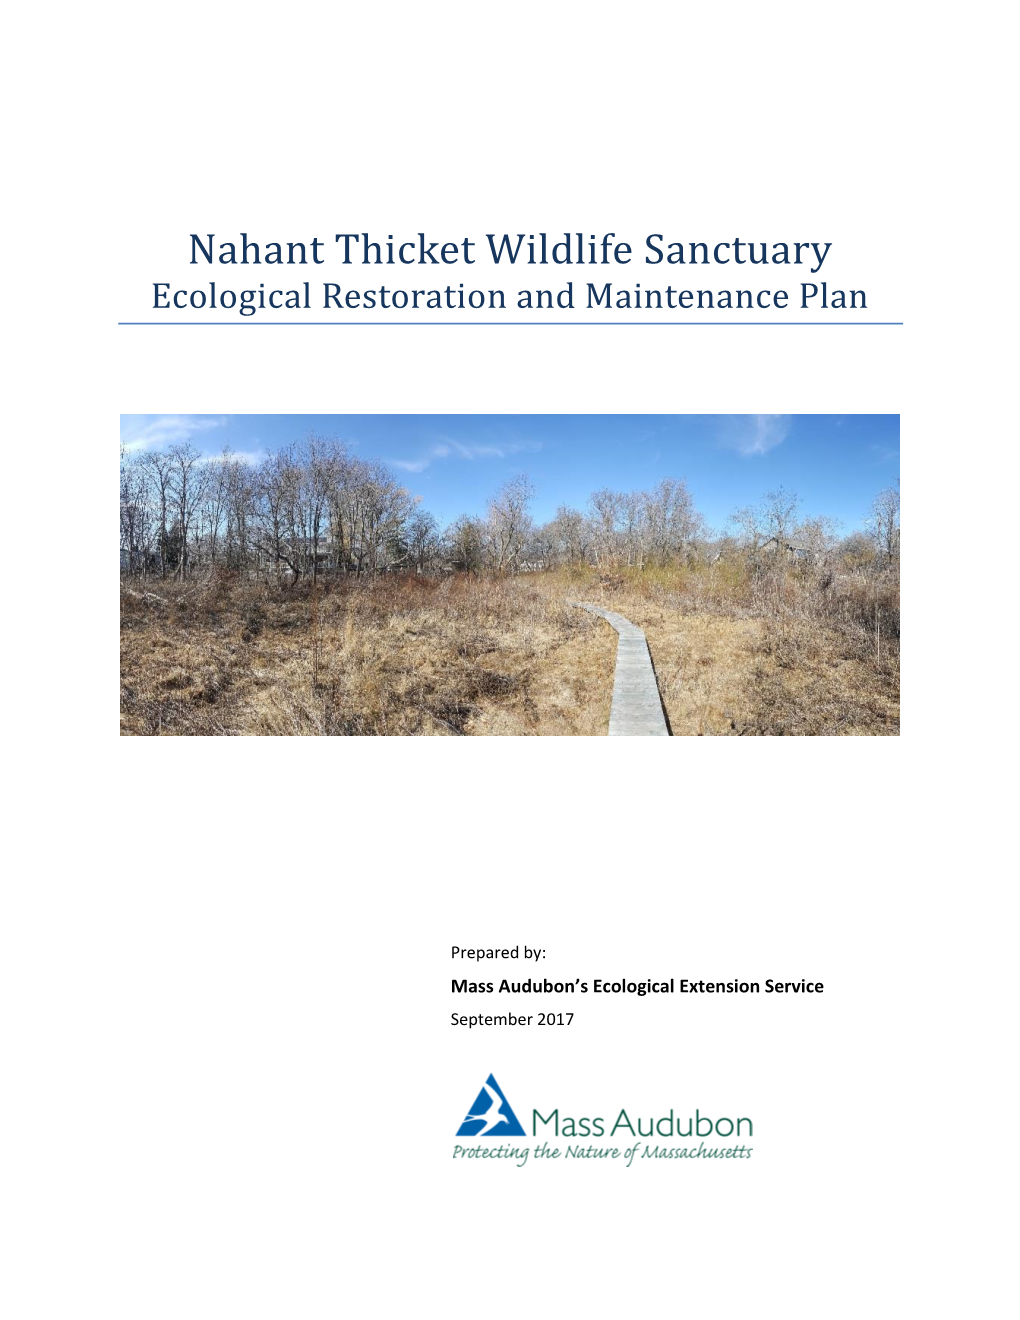 Nahant Thicket Wildlife Sanctuary Ecological Restoration and Maintenance Plan